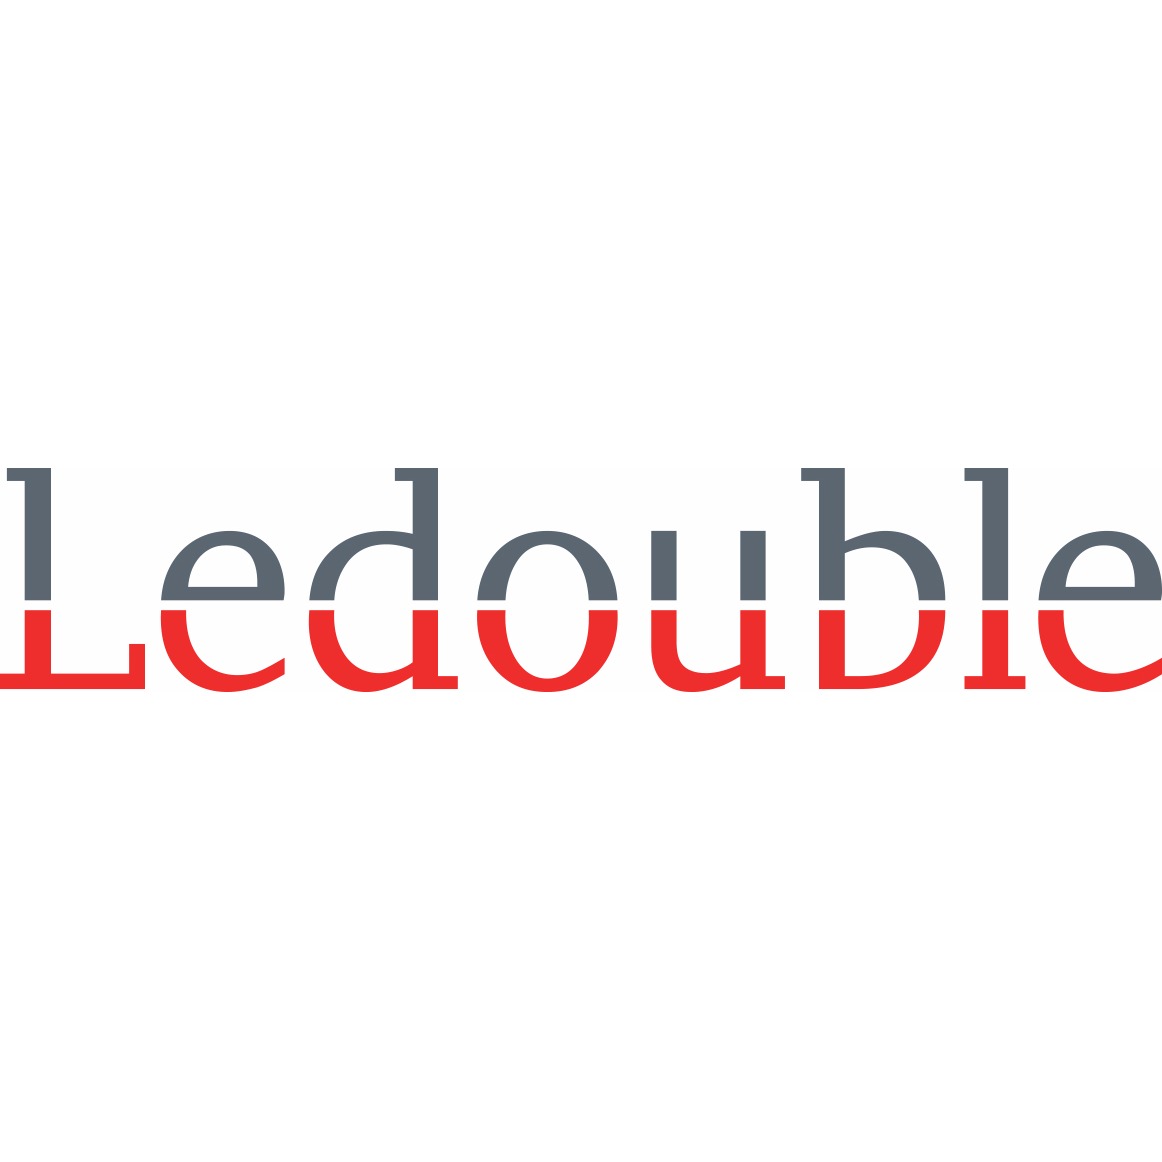 the Ledouble logo.